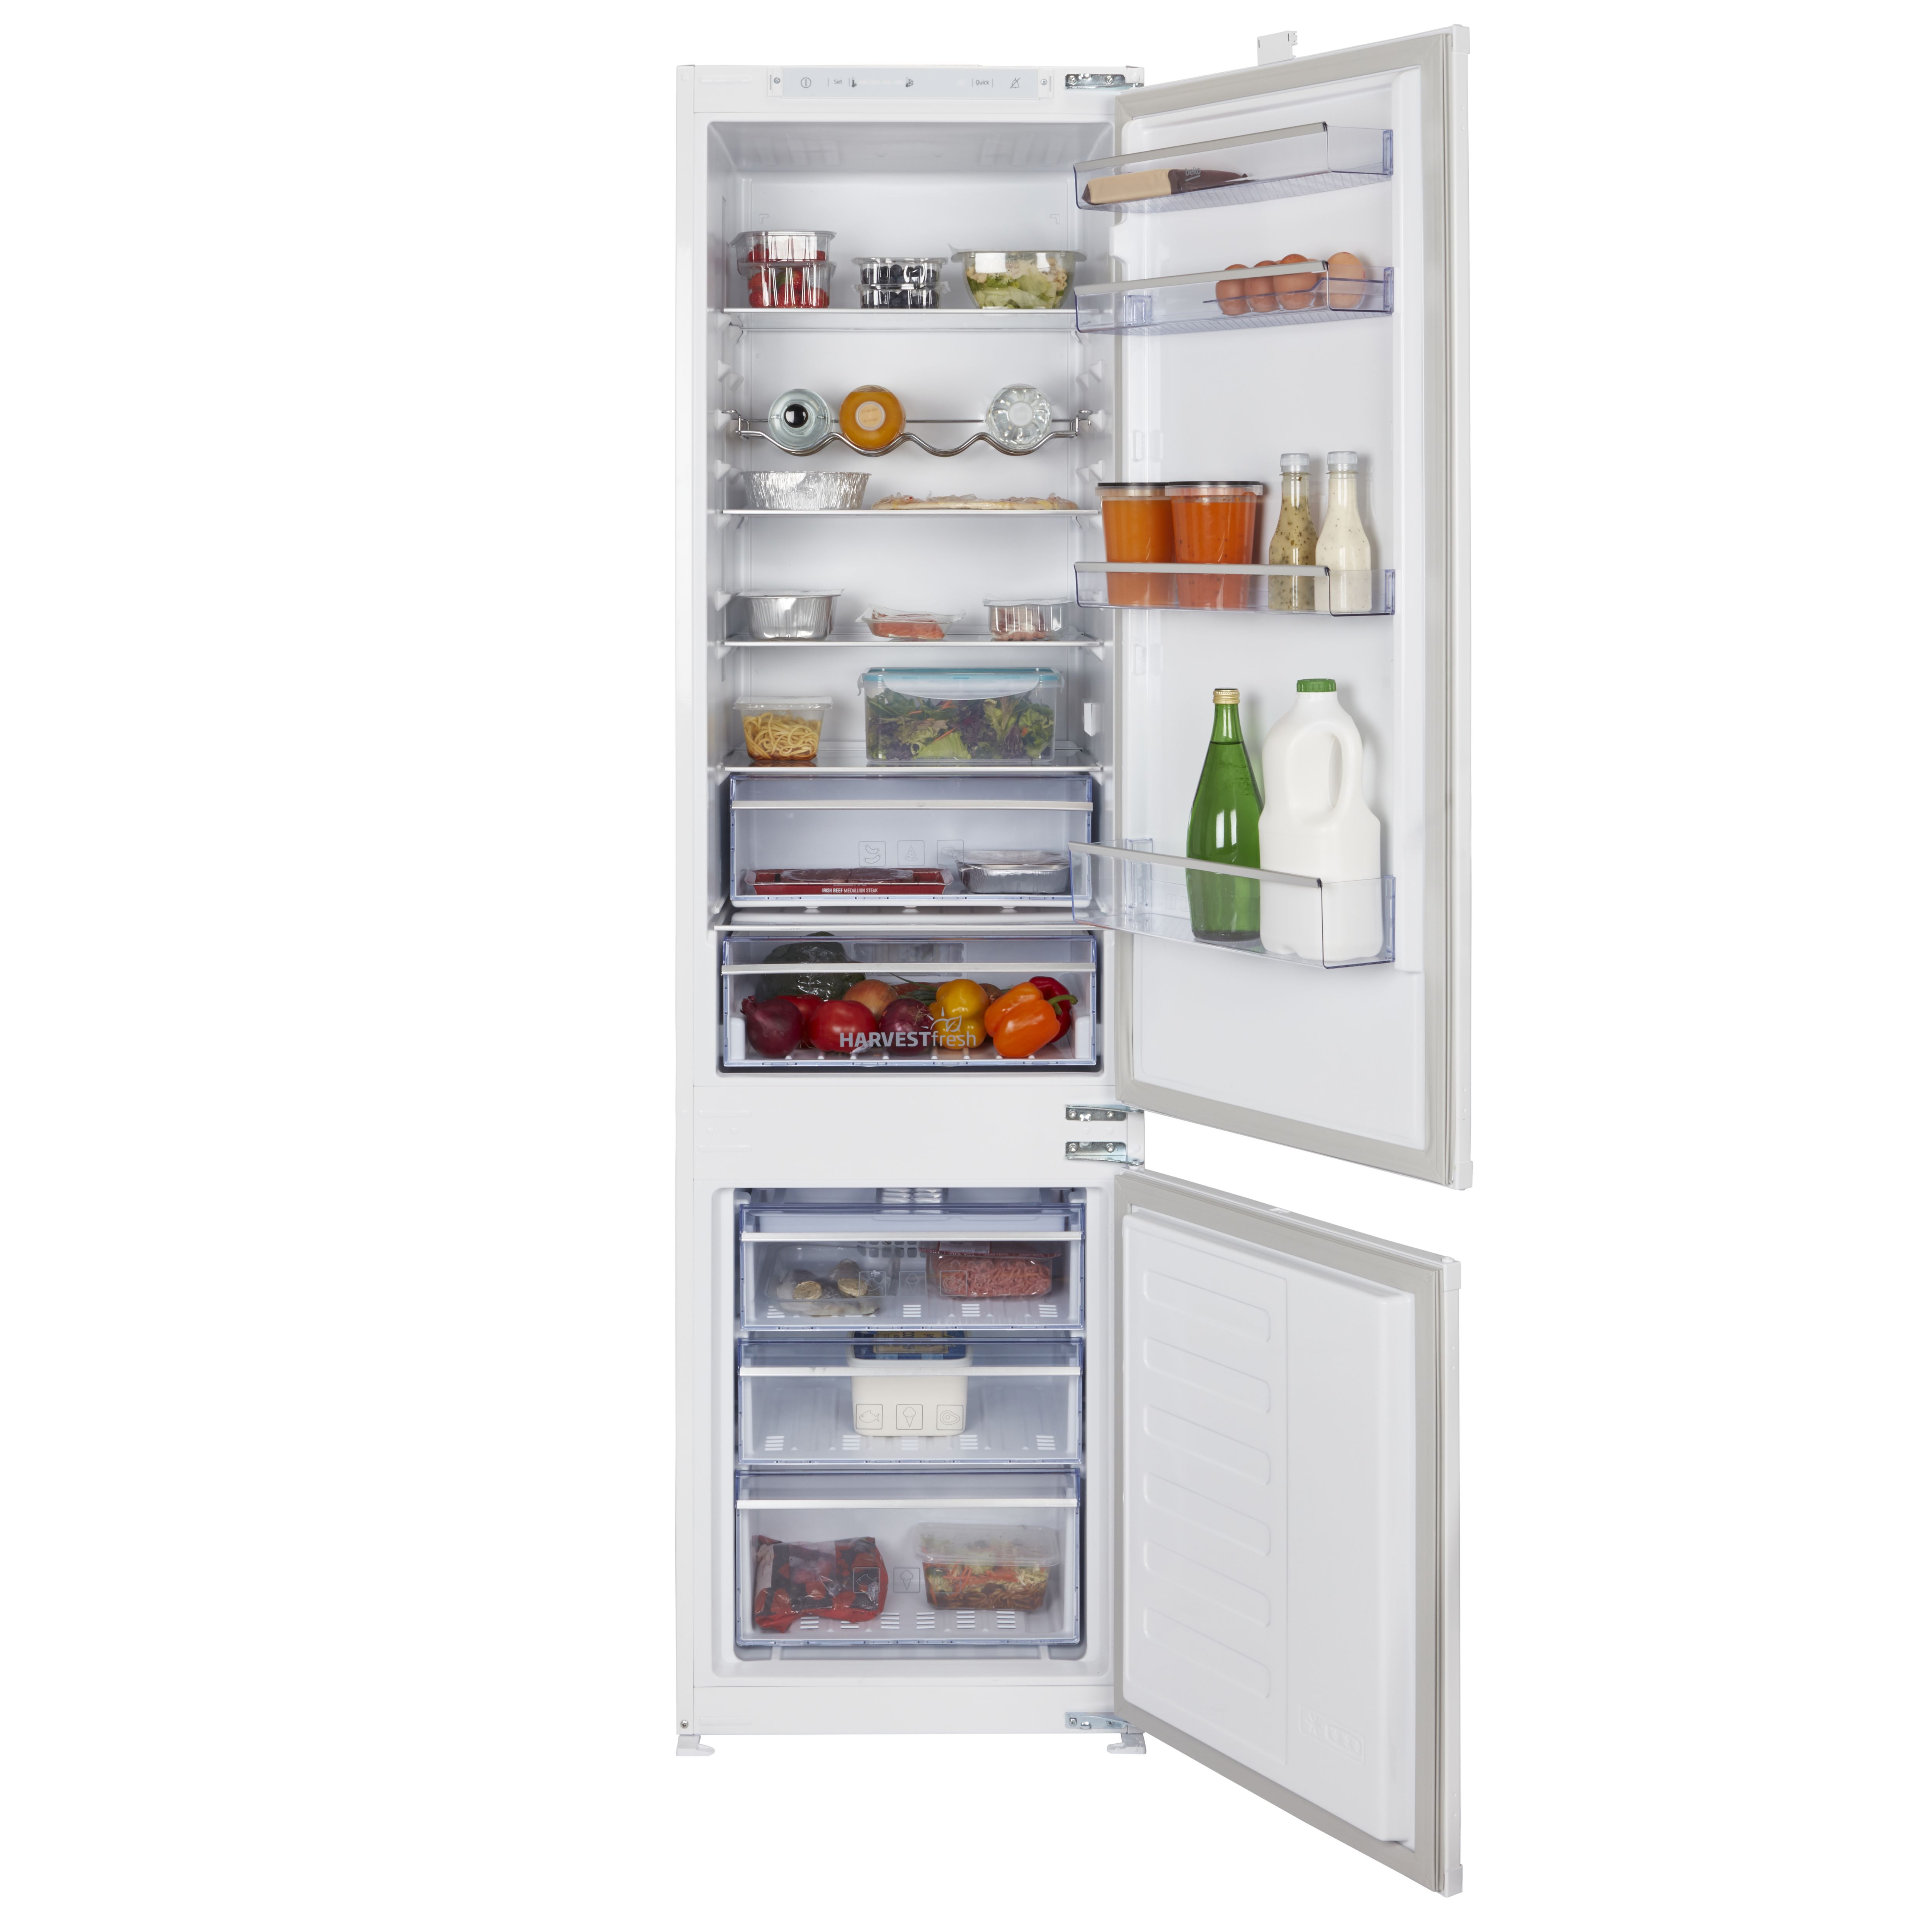 47+ Integrated fridge freezer extra tall ideas in 2021 